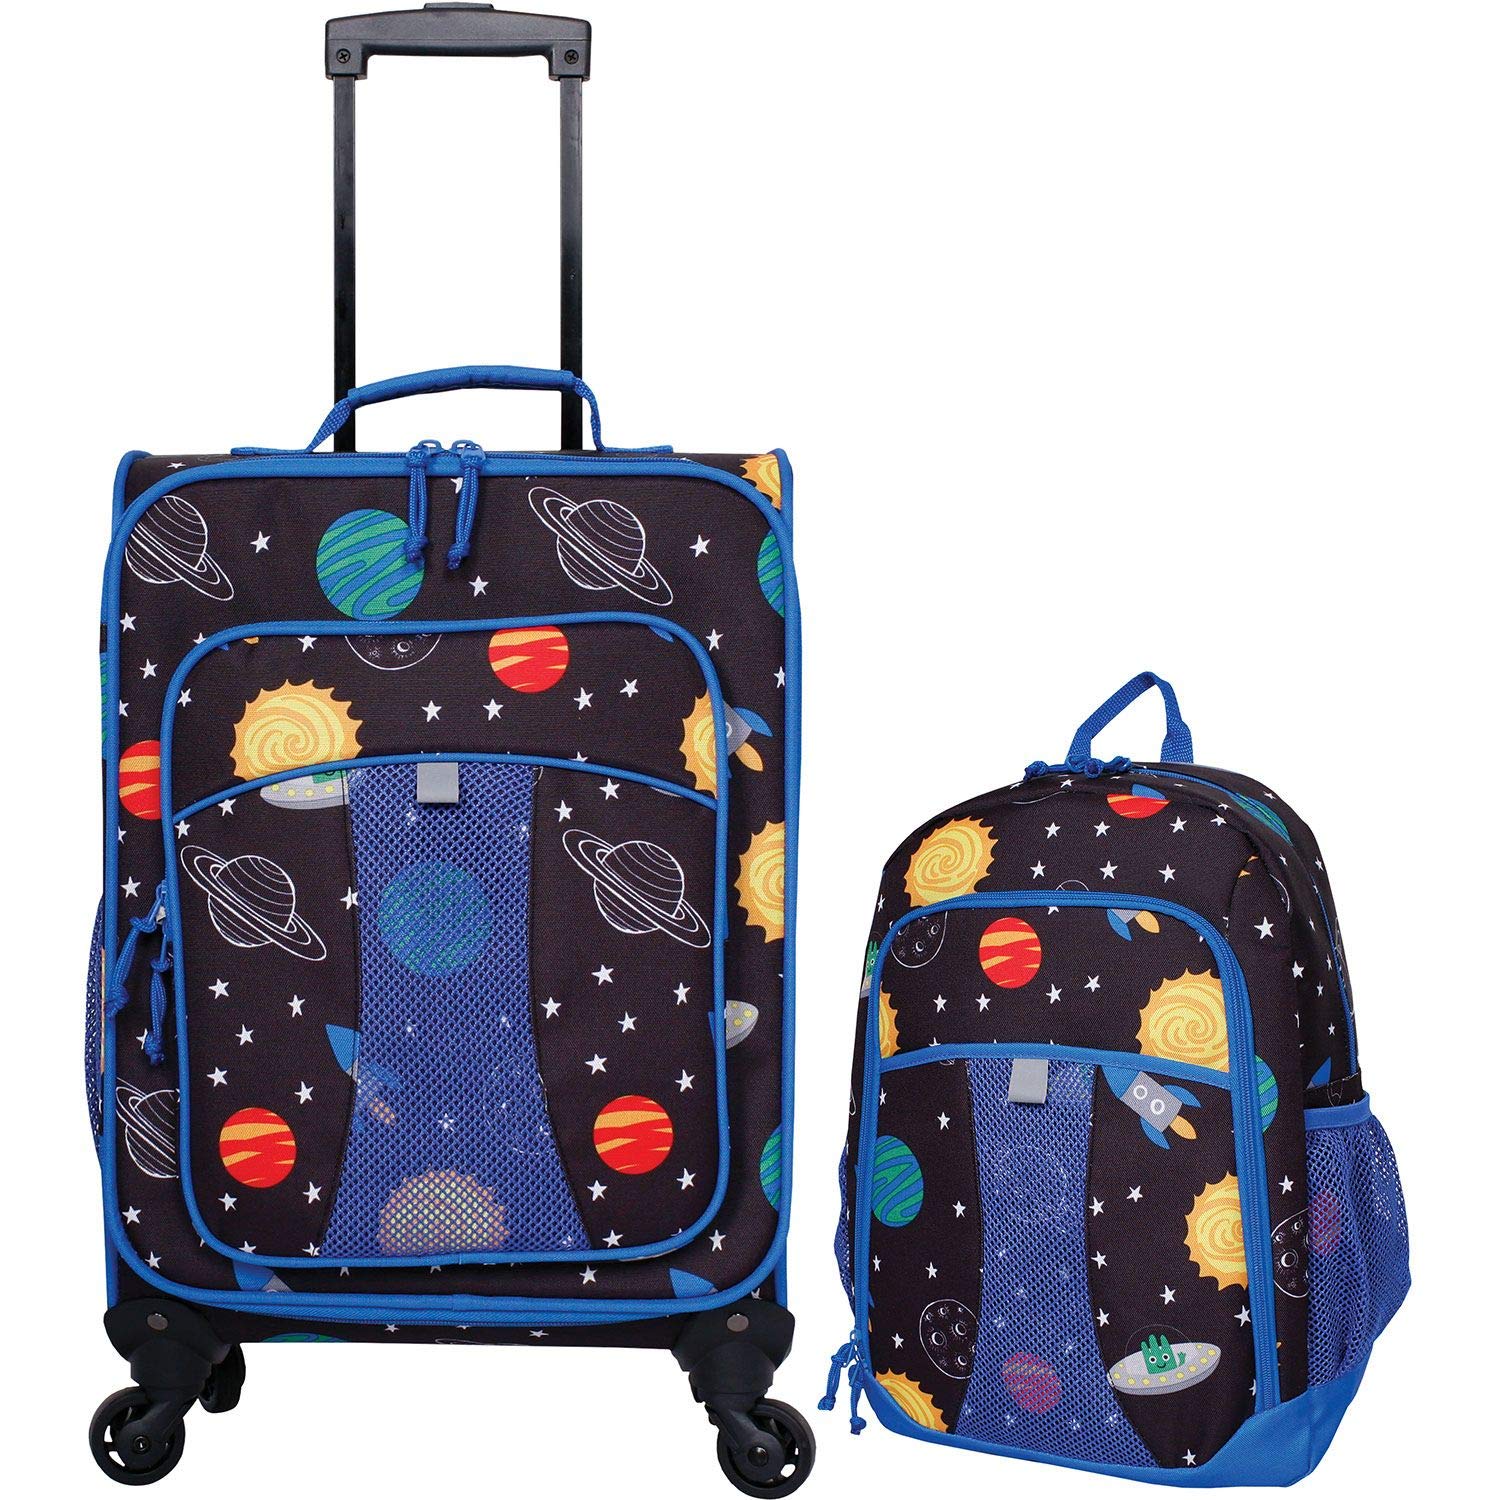 best kid travel luggage